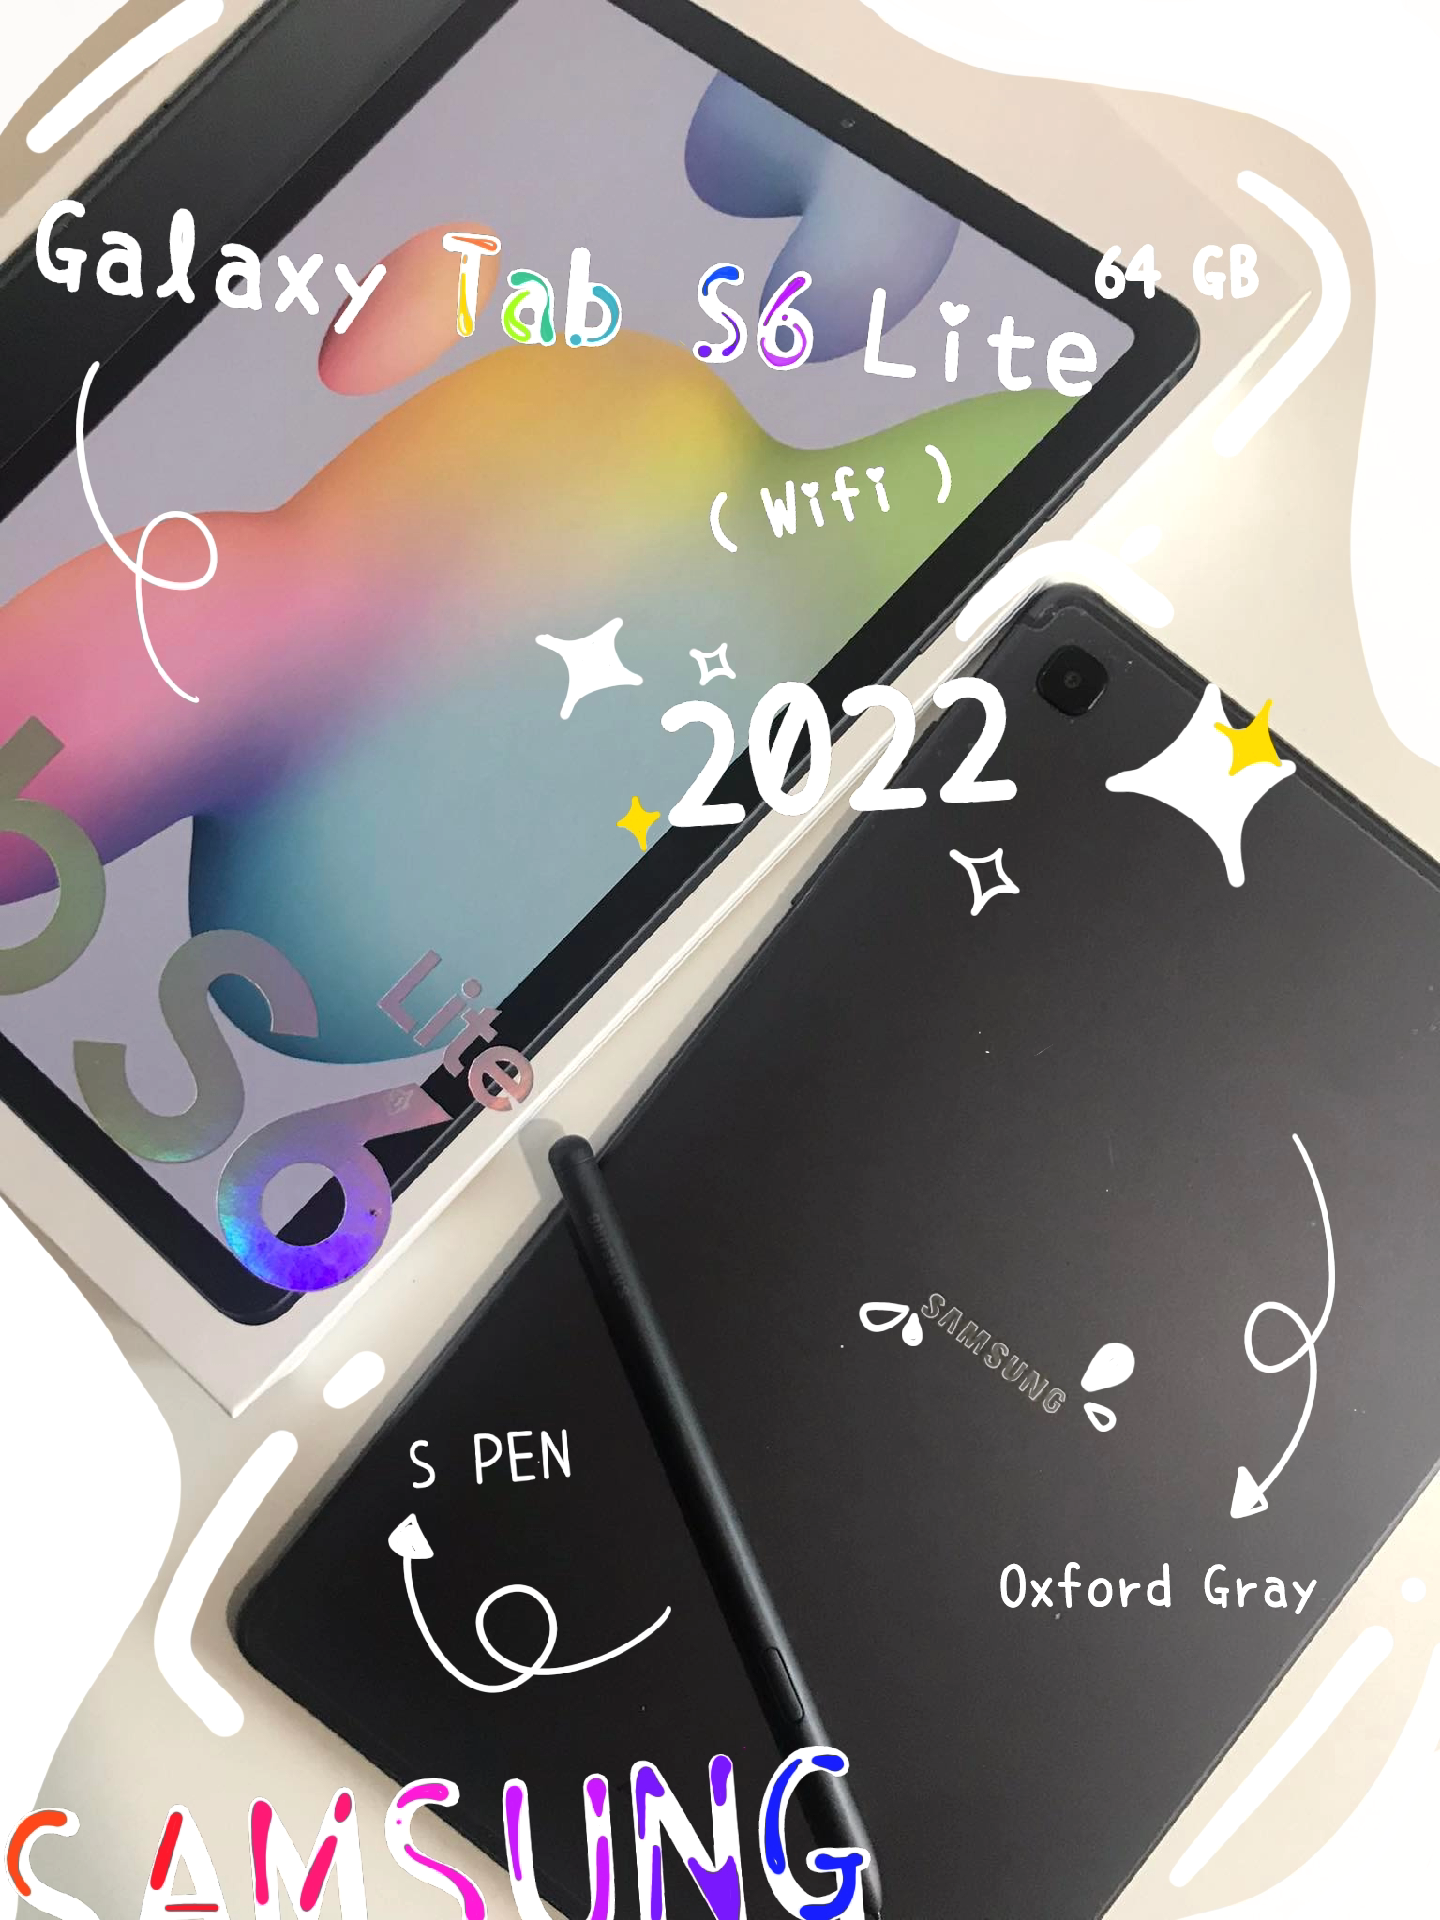 Samsung Galaxy Tab S6 Lite 2022 Officially Announced